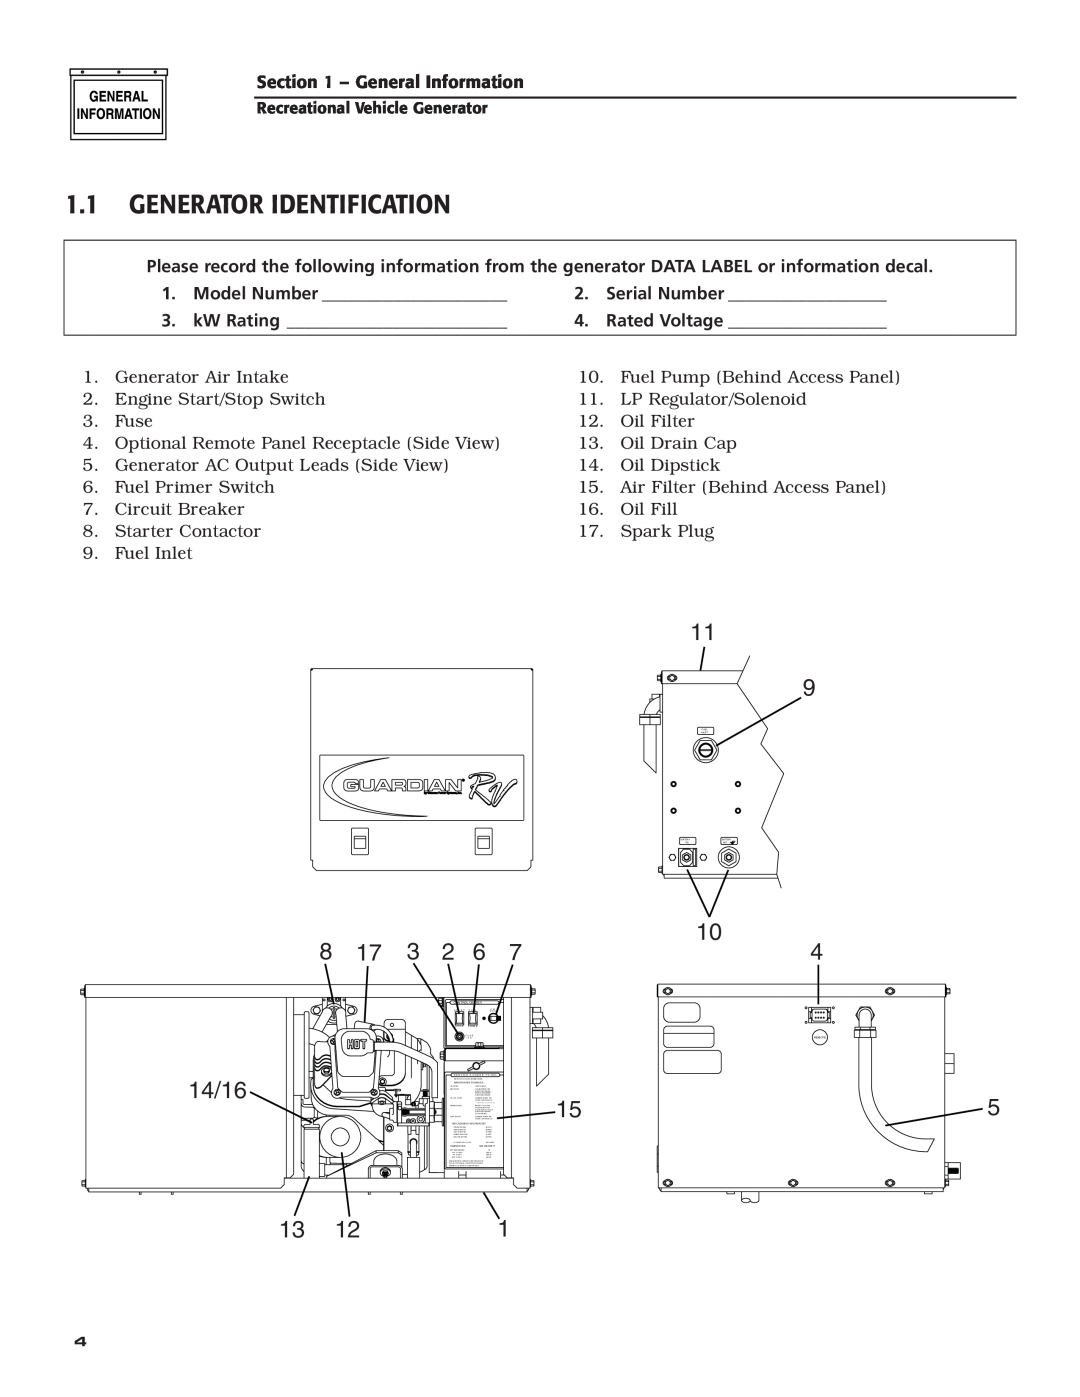 Generac Power Systems 004701-0 owner manual 1.1GENERATOR IDENTIFICATION, 11 9, 14/16 